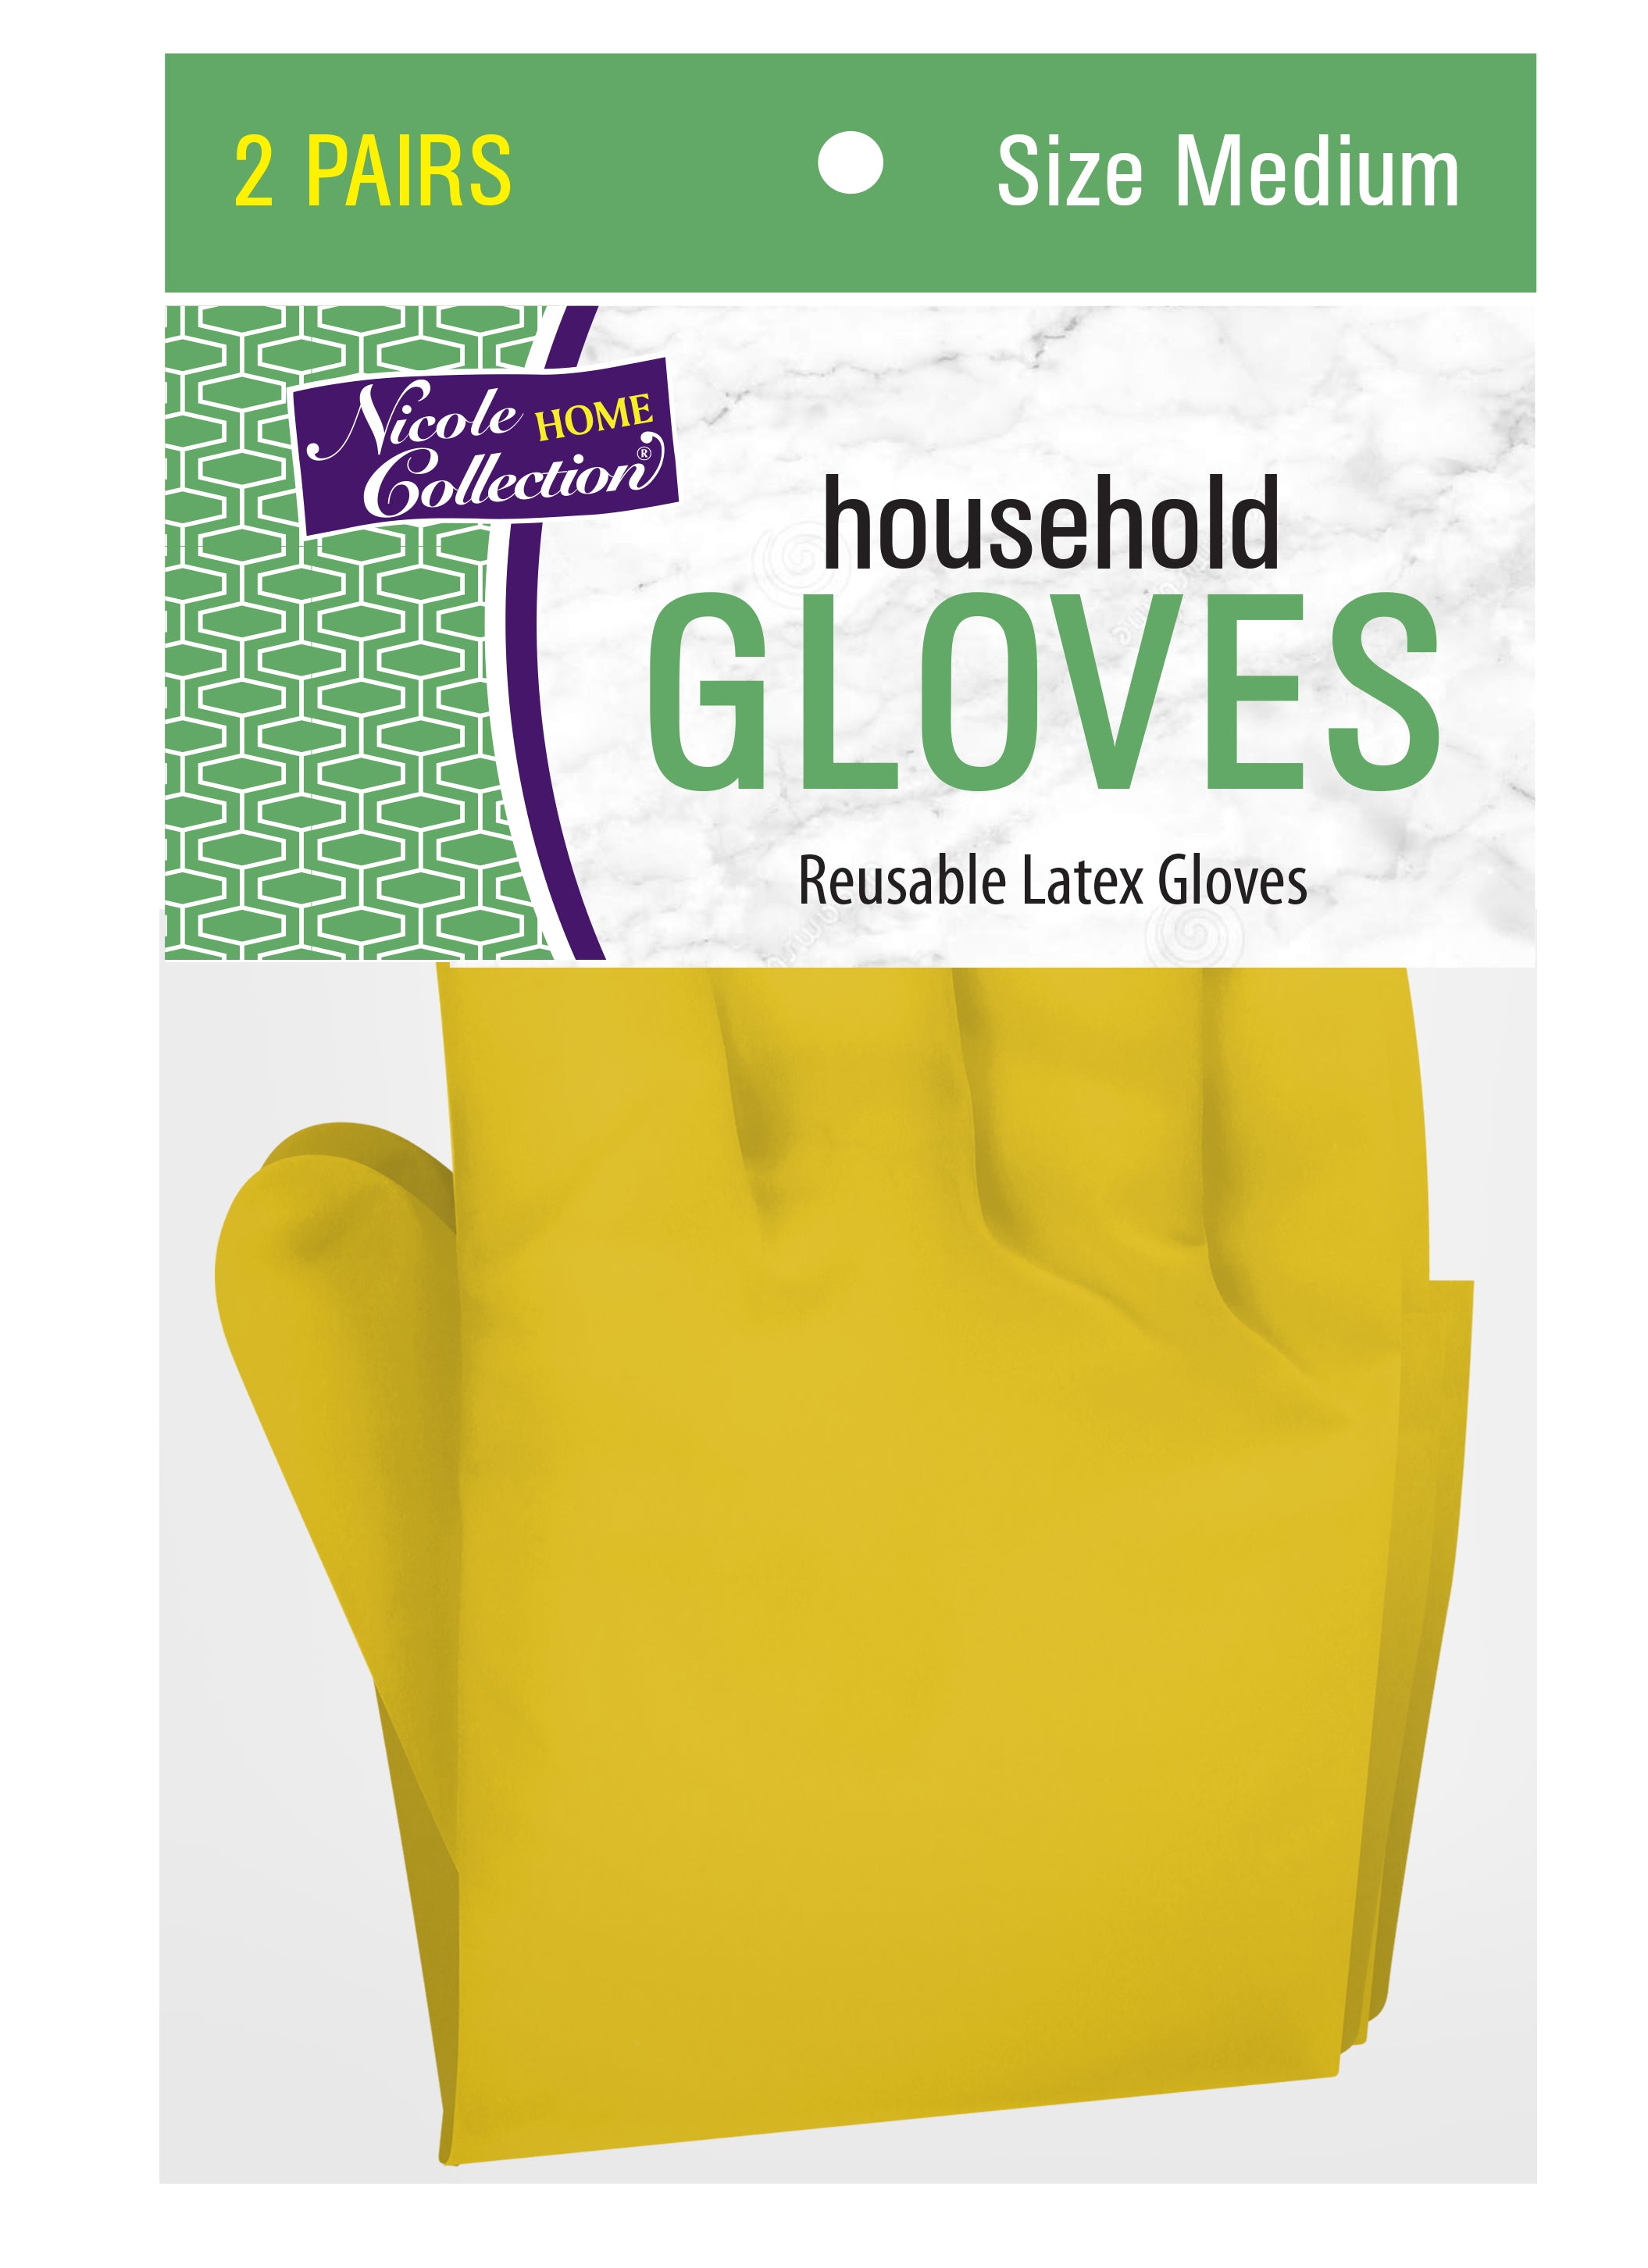 Gloves<br/>Size Options: 5.75inchx9.75inchx.5inch Gloves and 5.75inchx10inchx.5inch Gloves